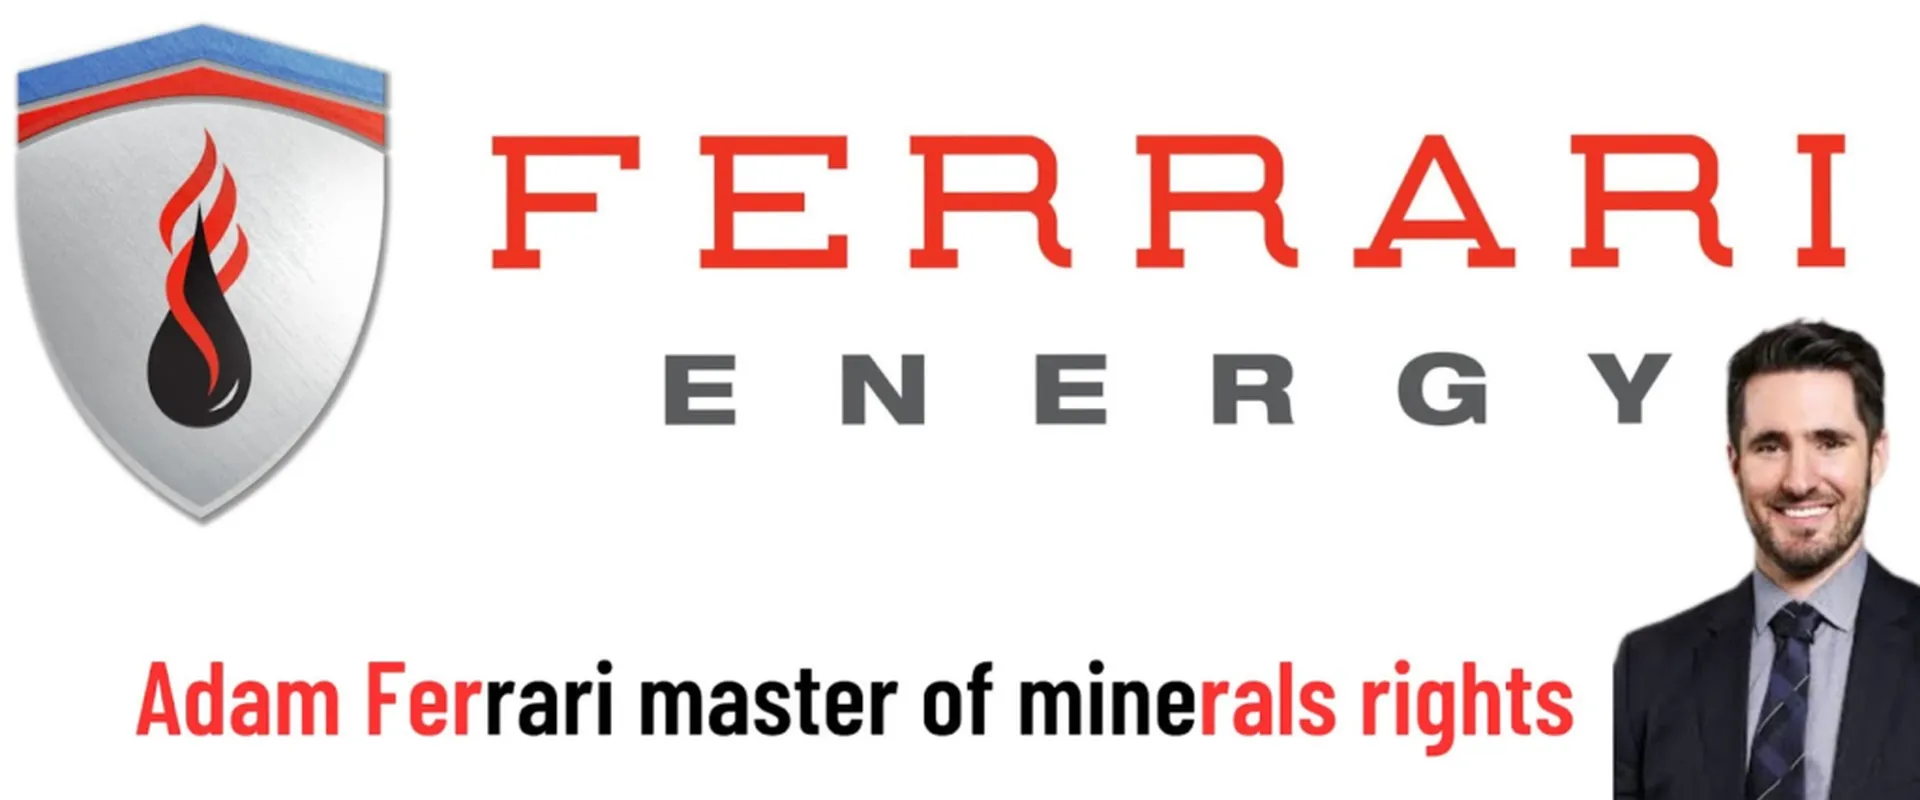 Adam Ferrari: Master of Minerals Rights